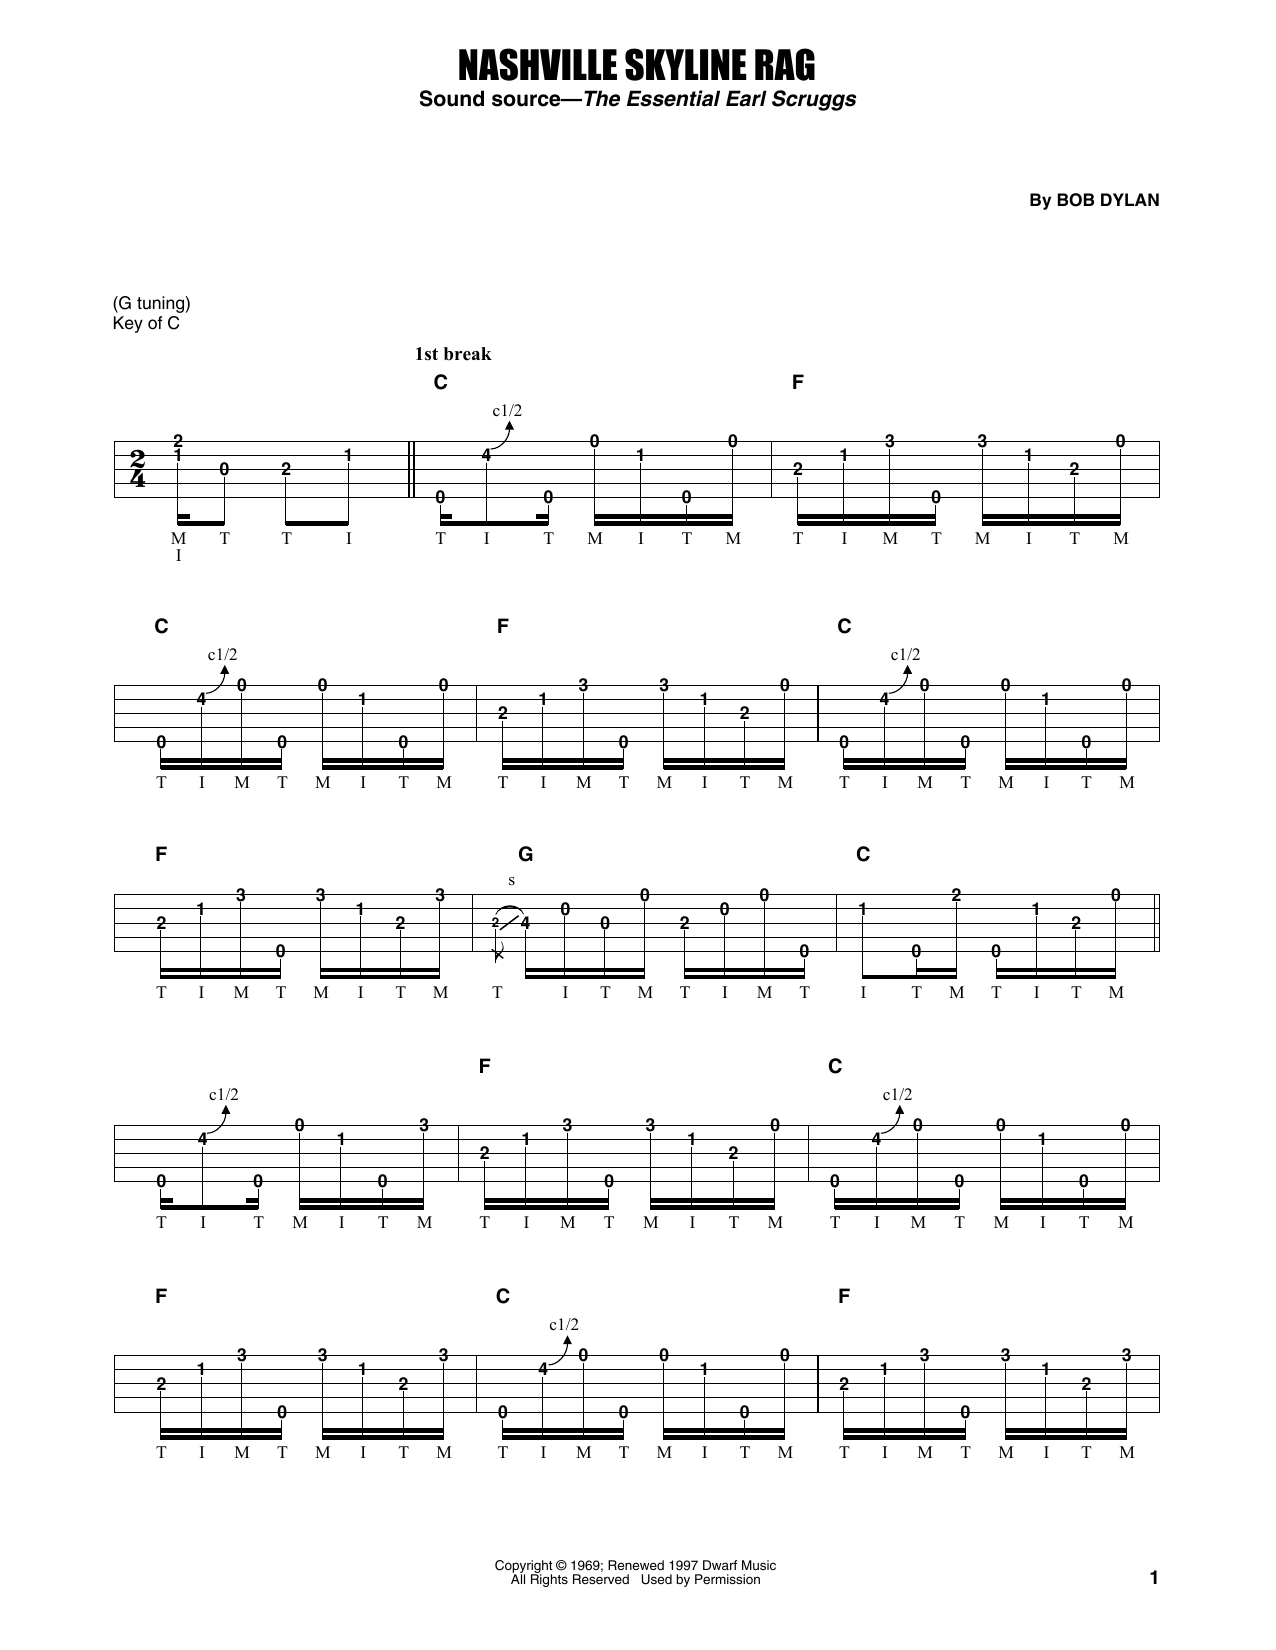 Flatt & Scruggs Nashville Skyline Rag Sheet Music Notes & Chords for Banjo Tab - Download or Print PDF